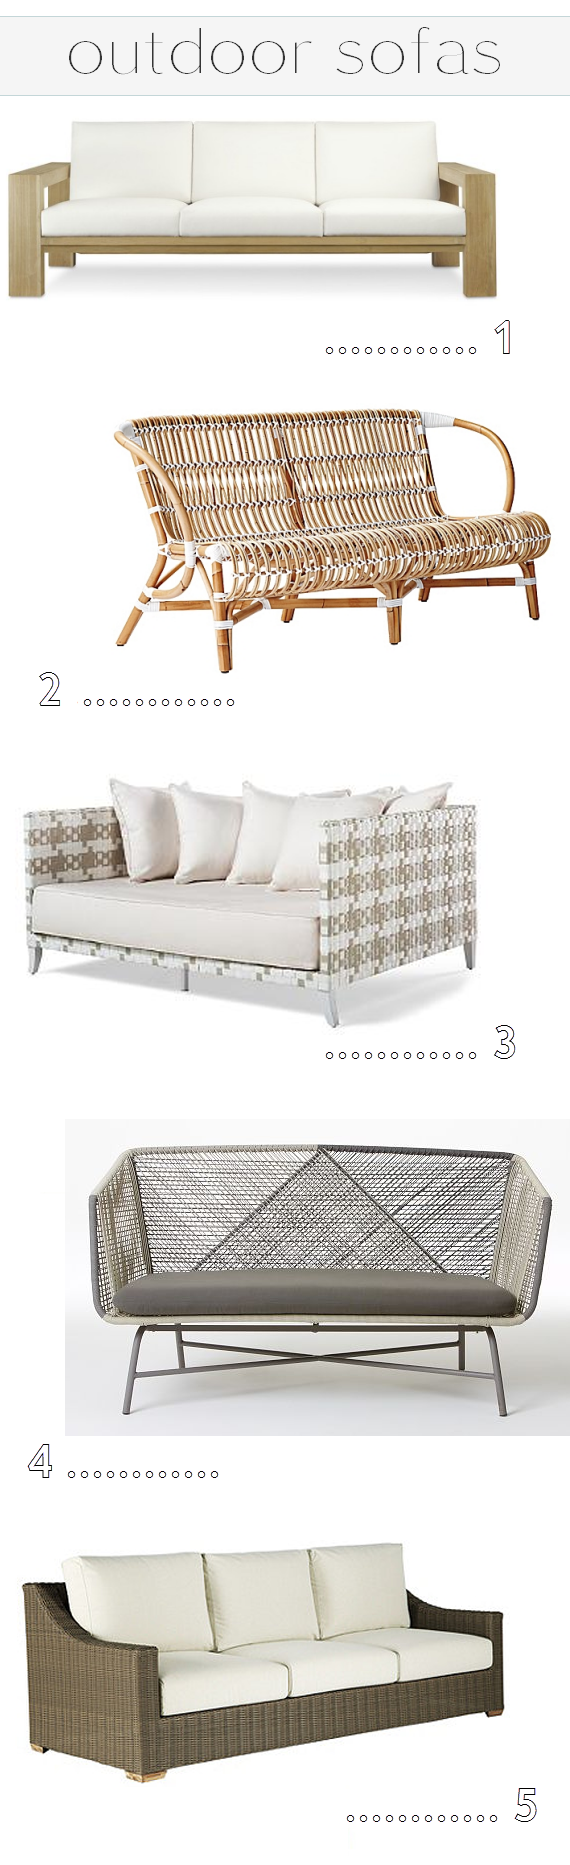 outdoor sofas - simplified bee